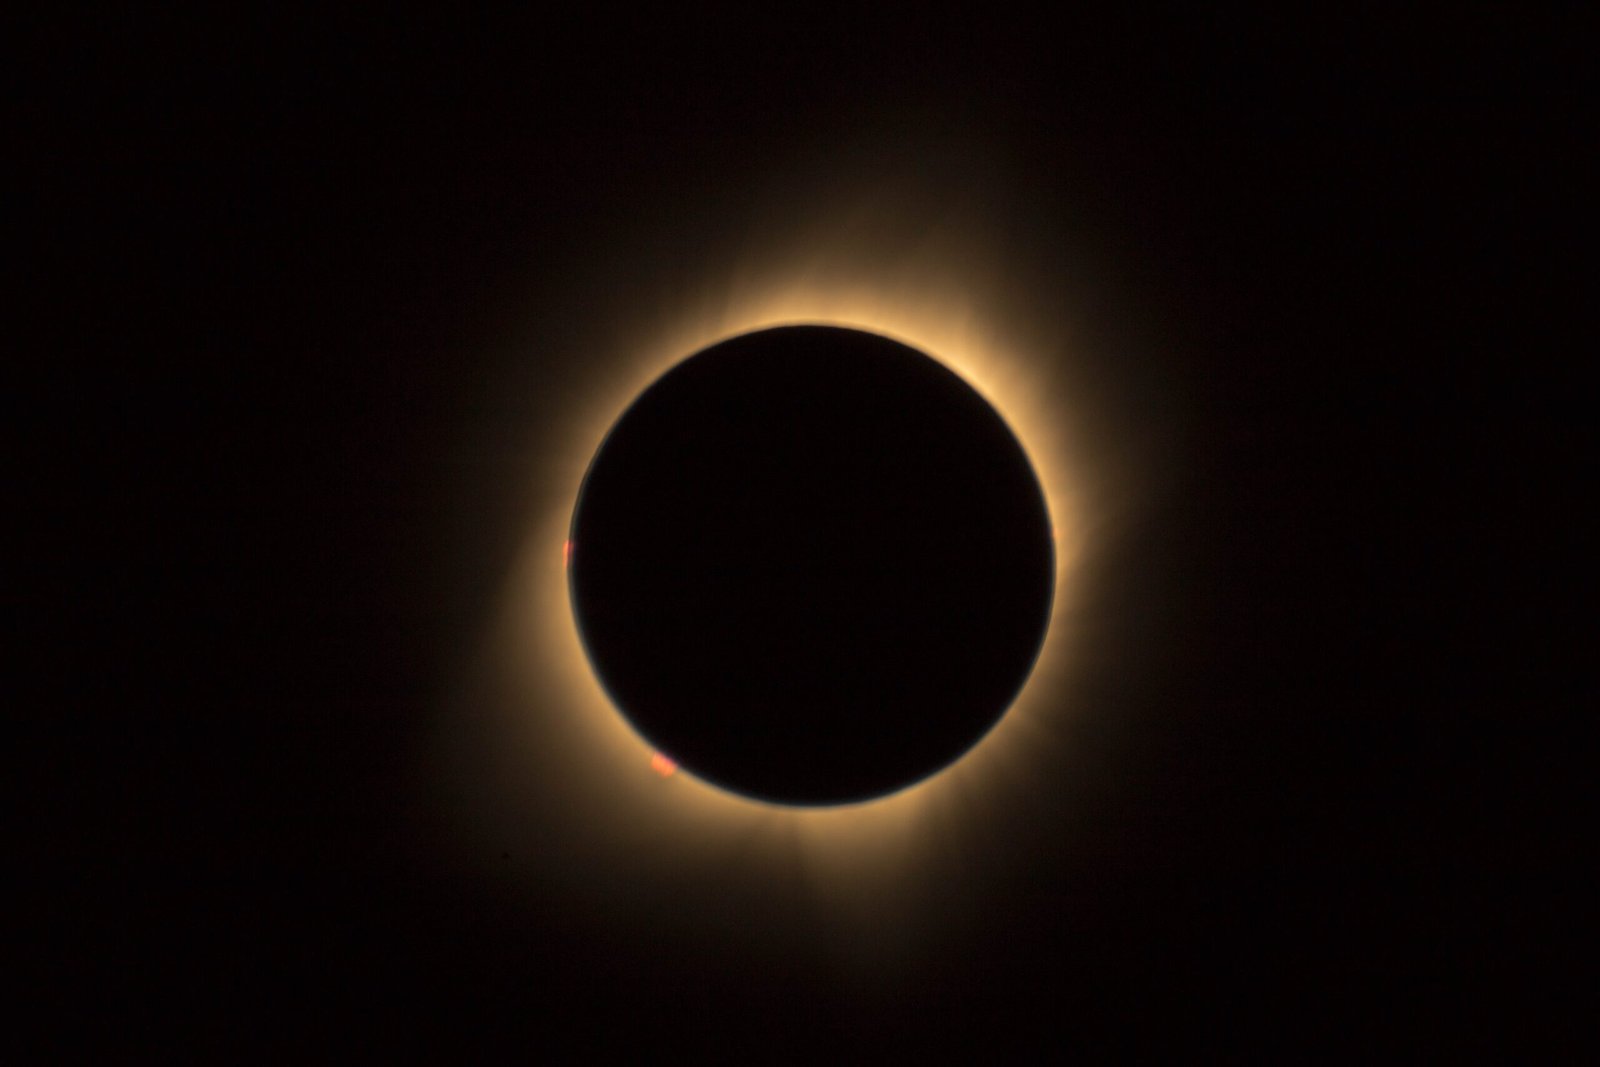 A close-up photo of a solar eclipse